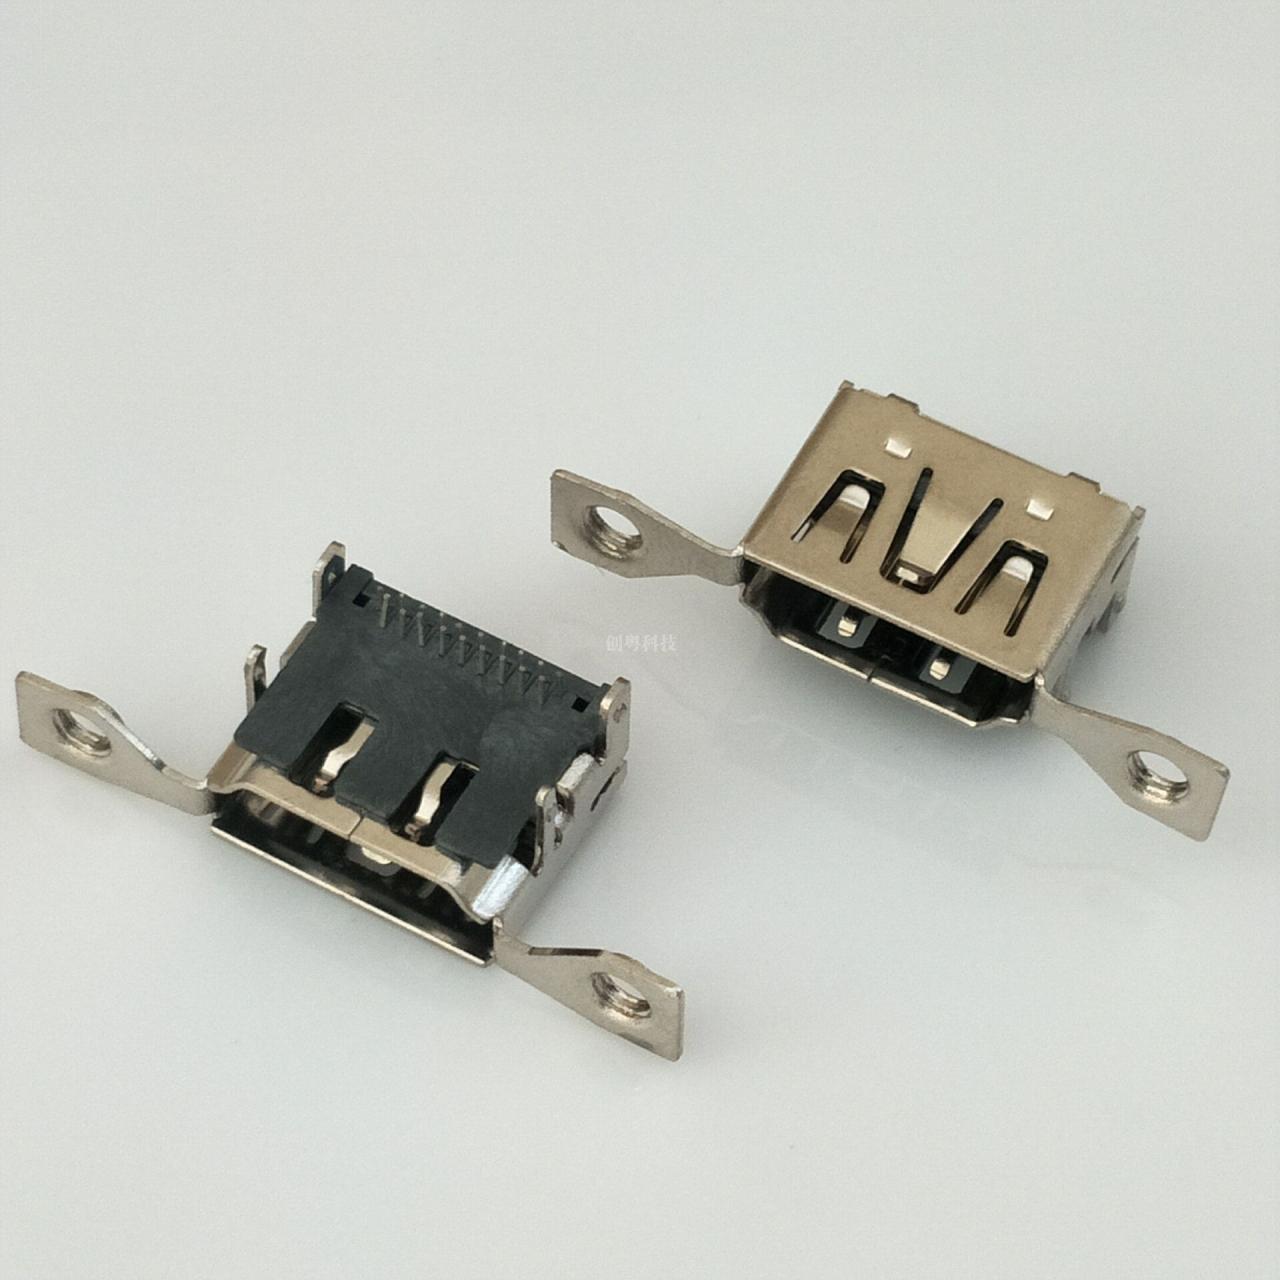 HDMI接口：用于连接显示器或电视等视频输出设备(hdmi接口有几种)-亿动工作室's Blog